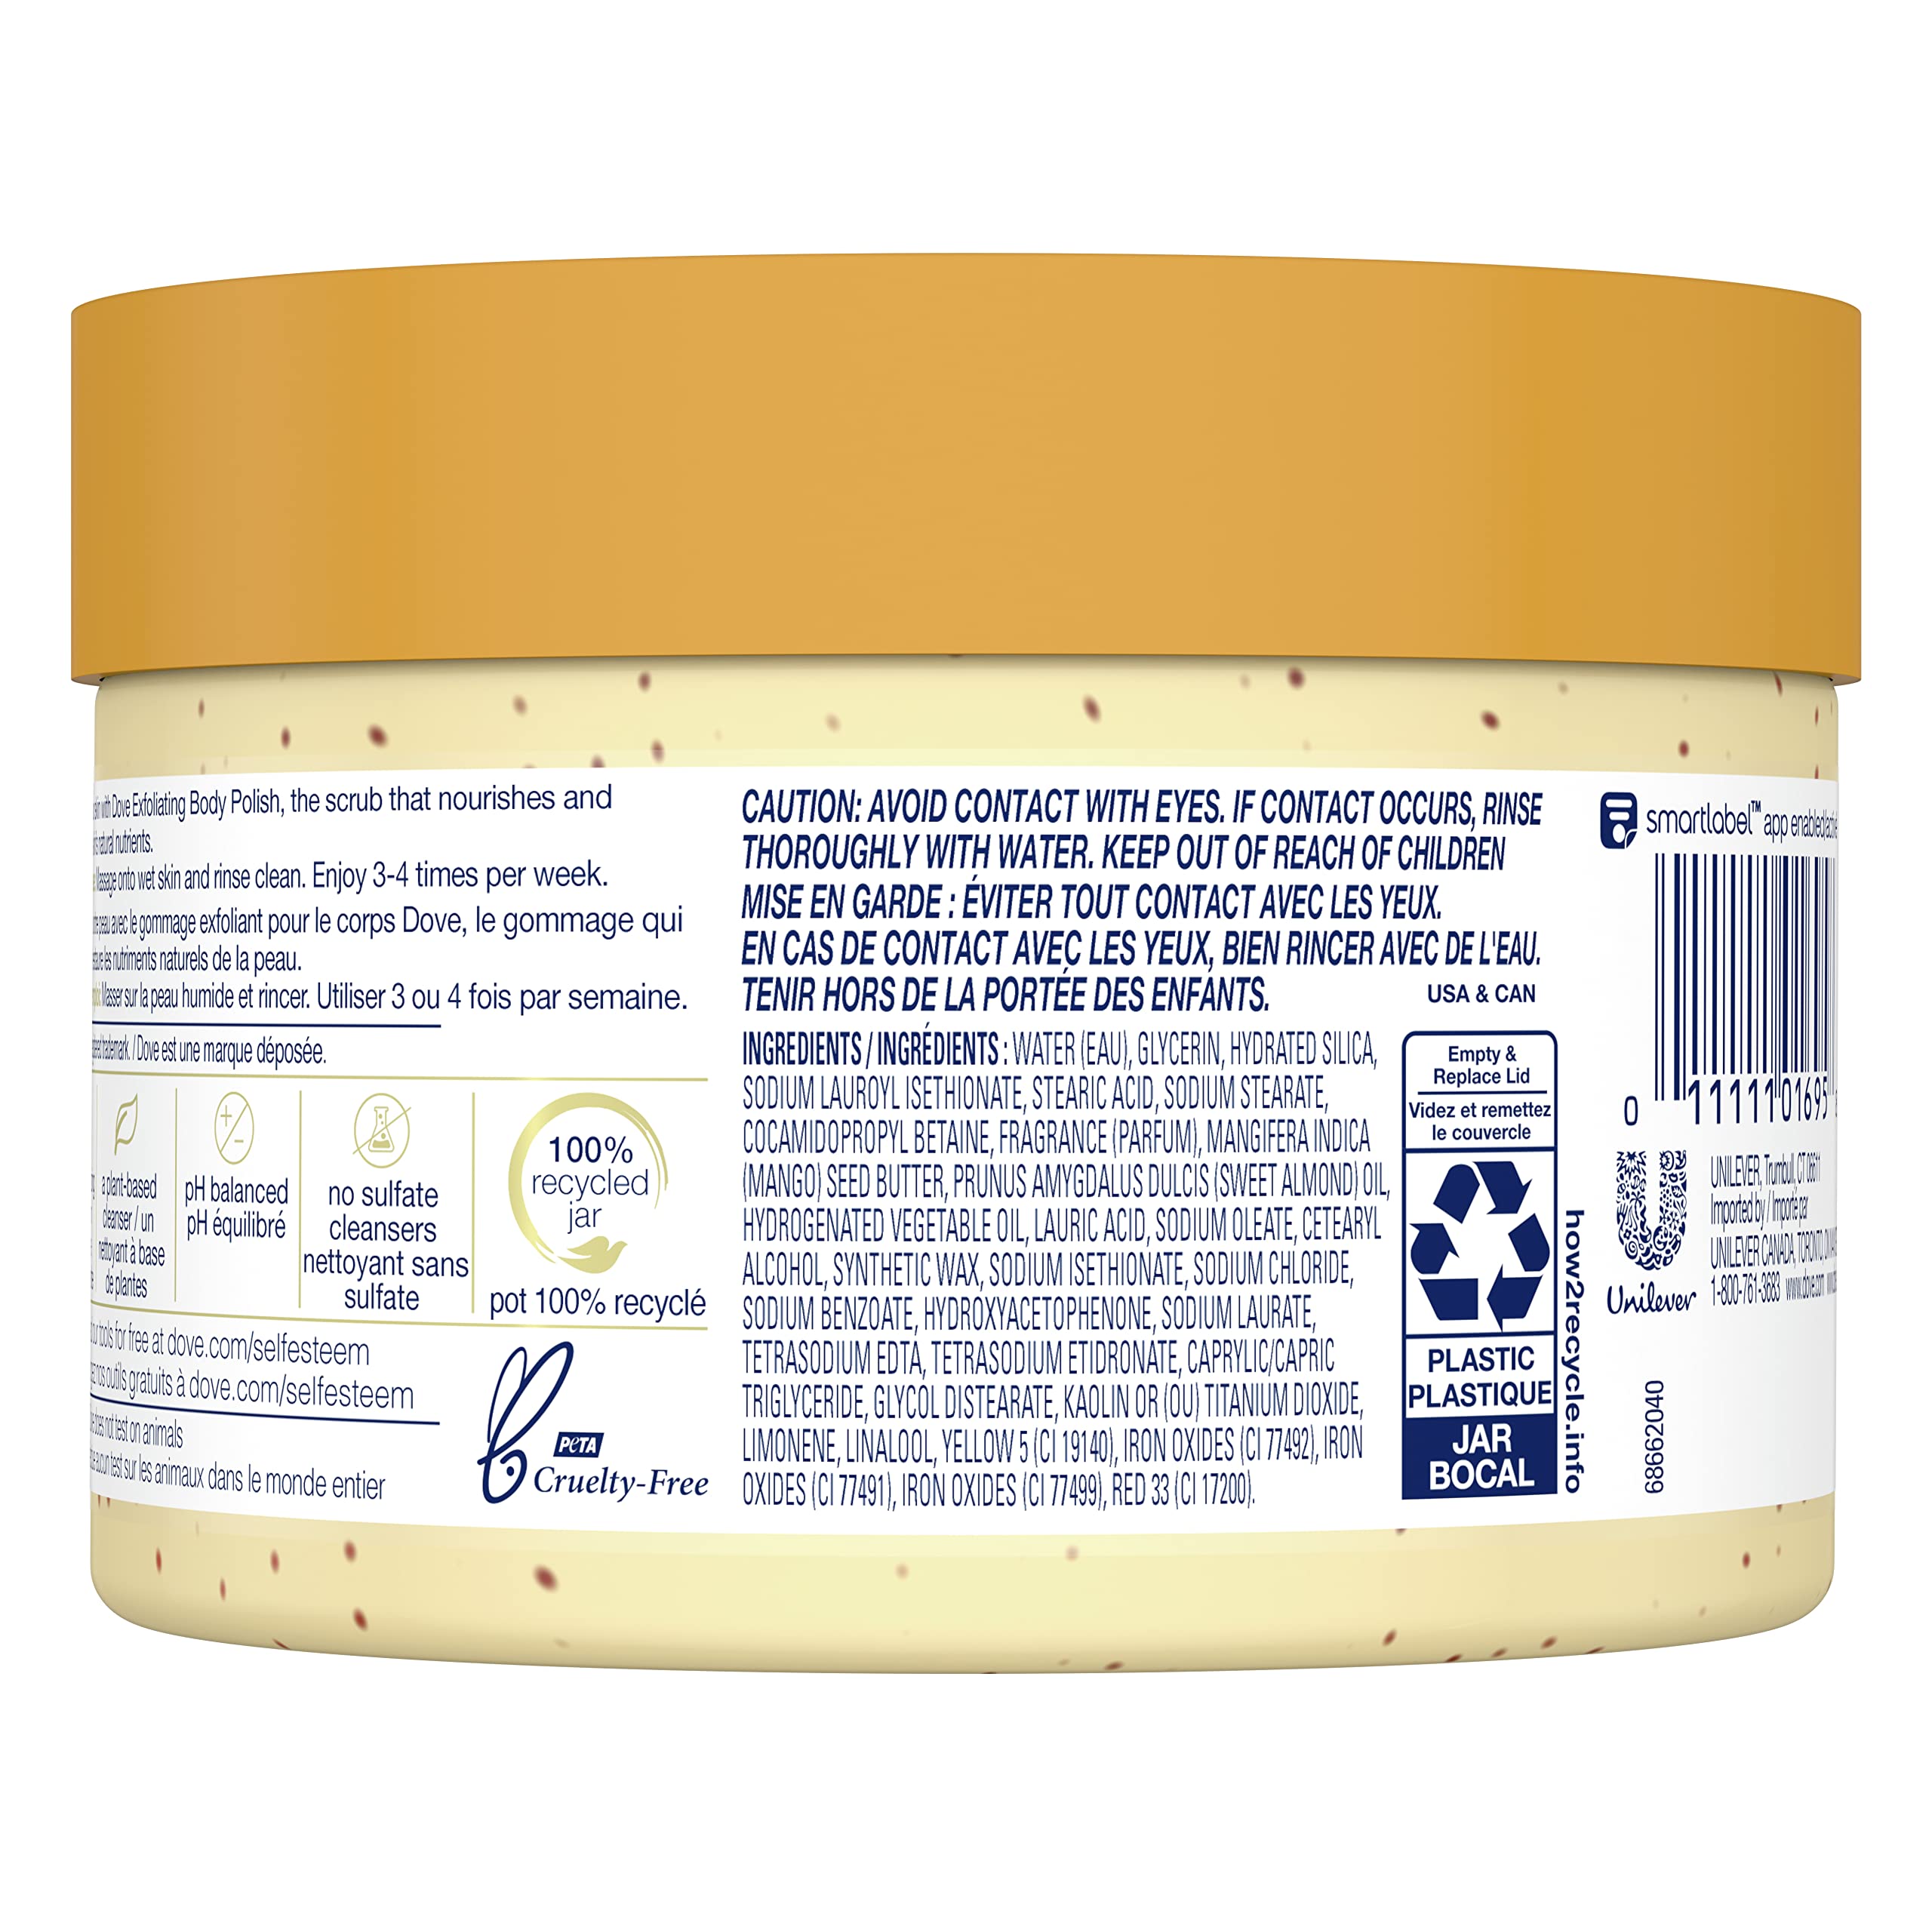 Dove Scrub Crushed Almond & Mango Butter For Silky Smooth Skin Body Scrub Exfoliates & Restores Skin's Natural Nutrients 10.5 oz